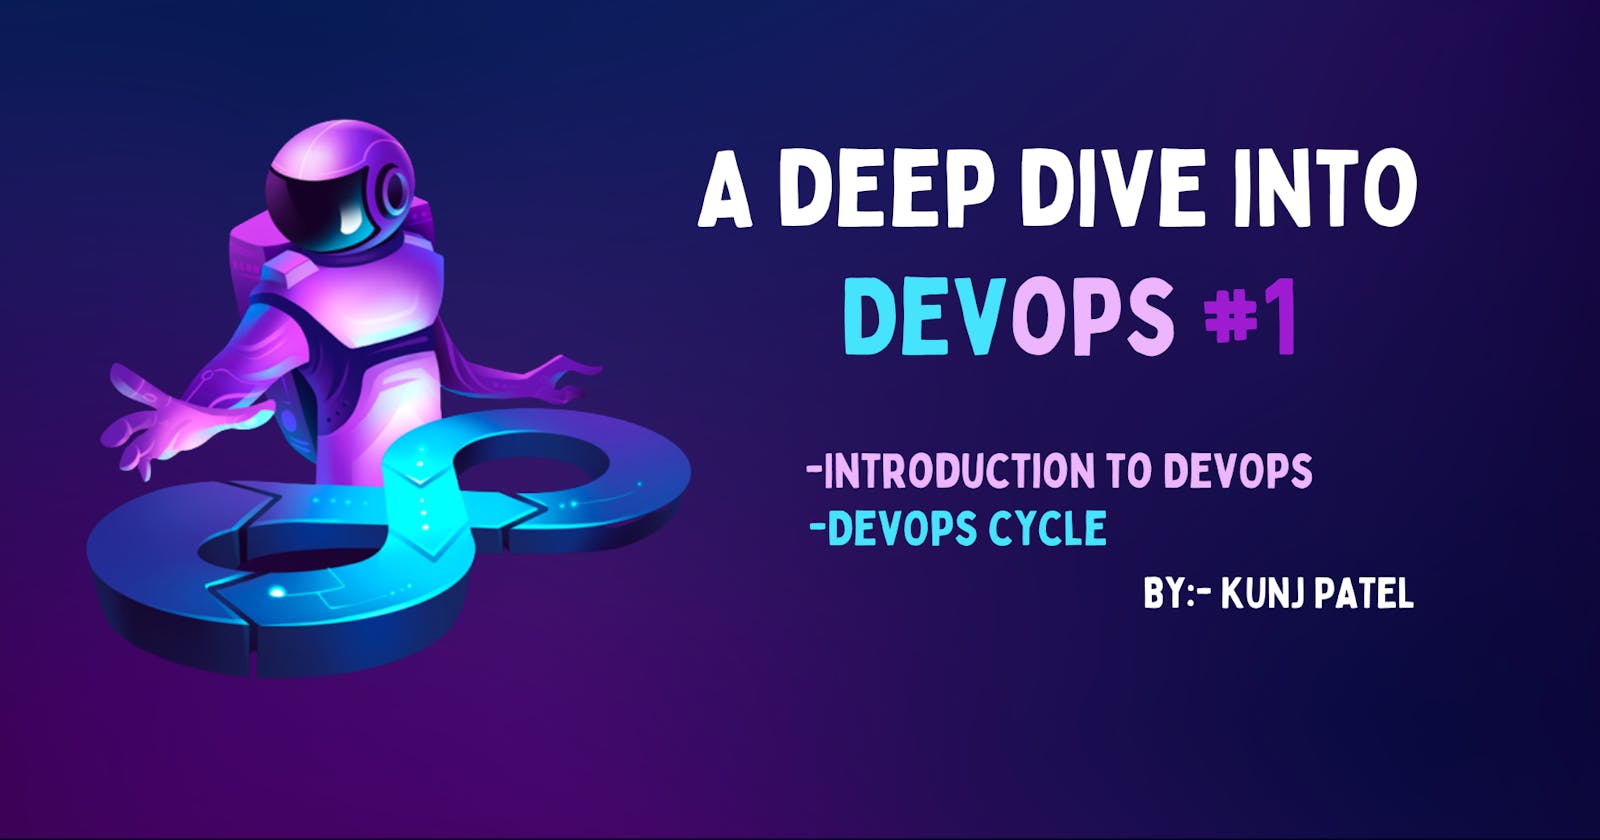 A Deep dive into DevOps #1